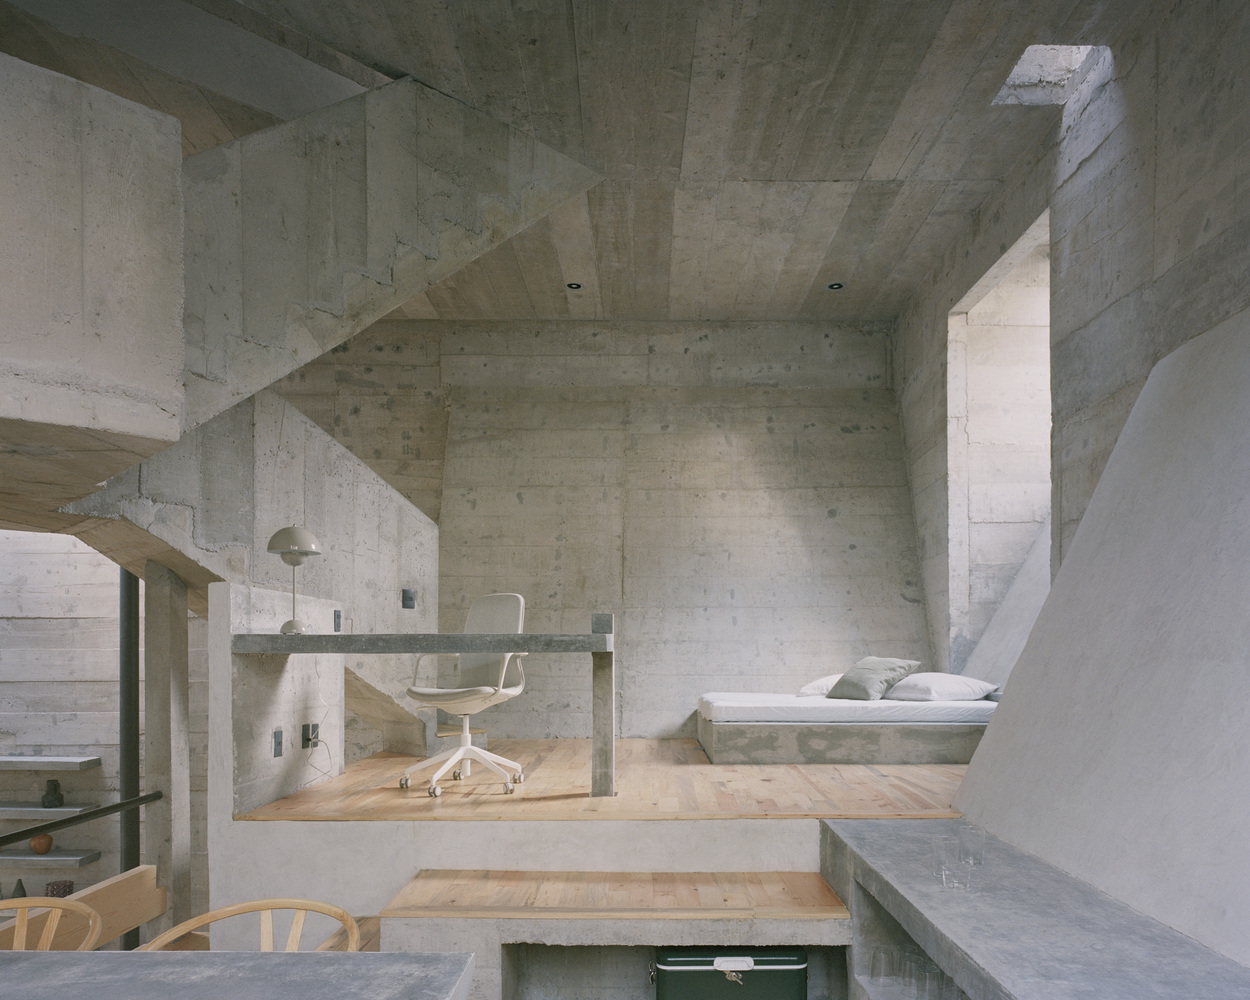 Built-in concrete furniture